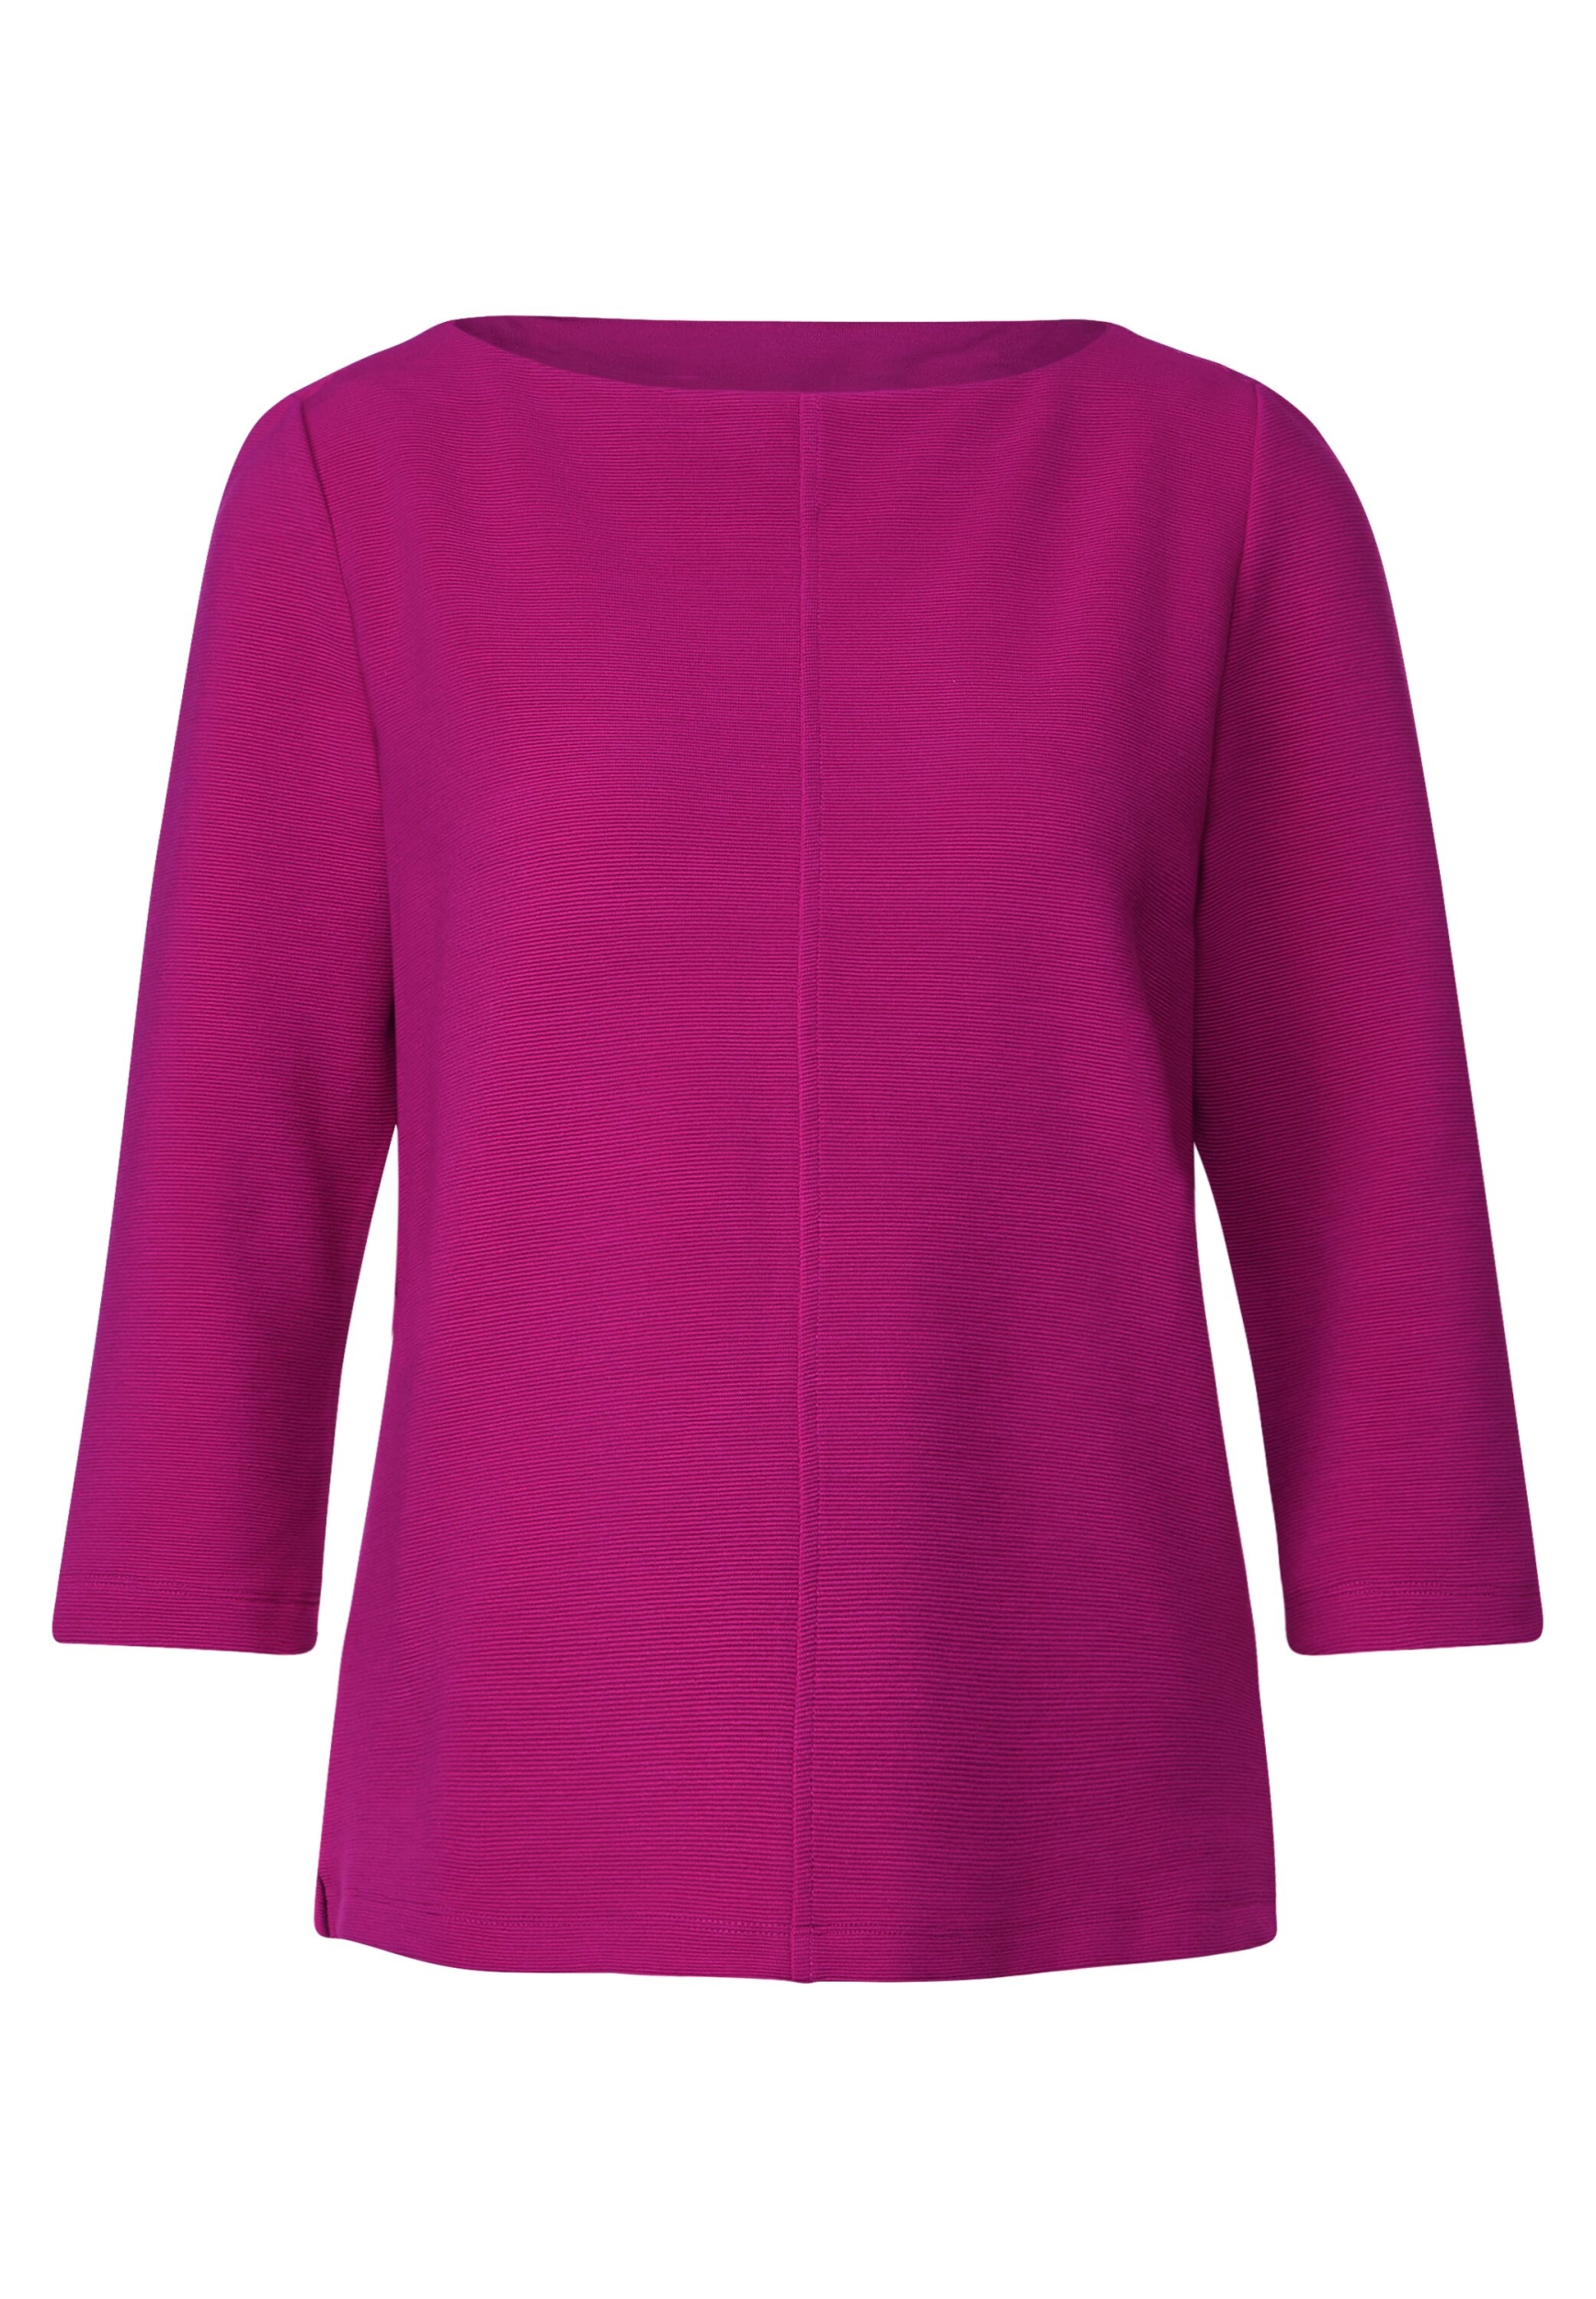 LTD QR rib neck | bright shirt cozy pink | u-boat | A320801-15463-38 38